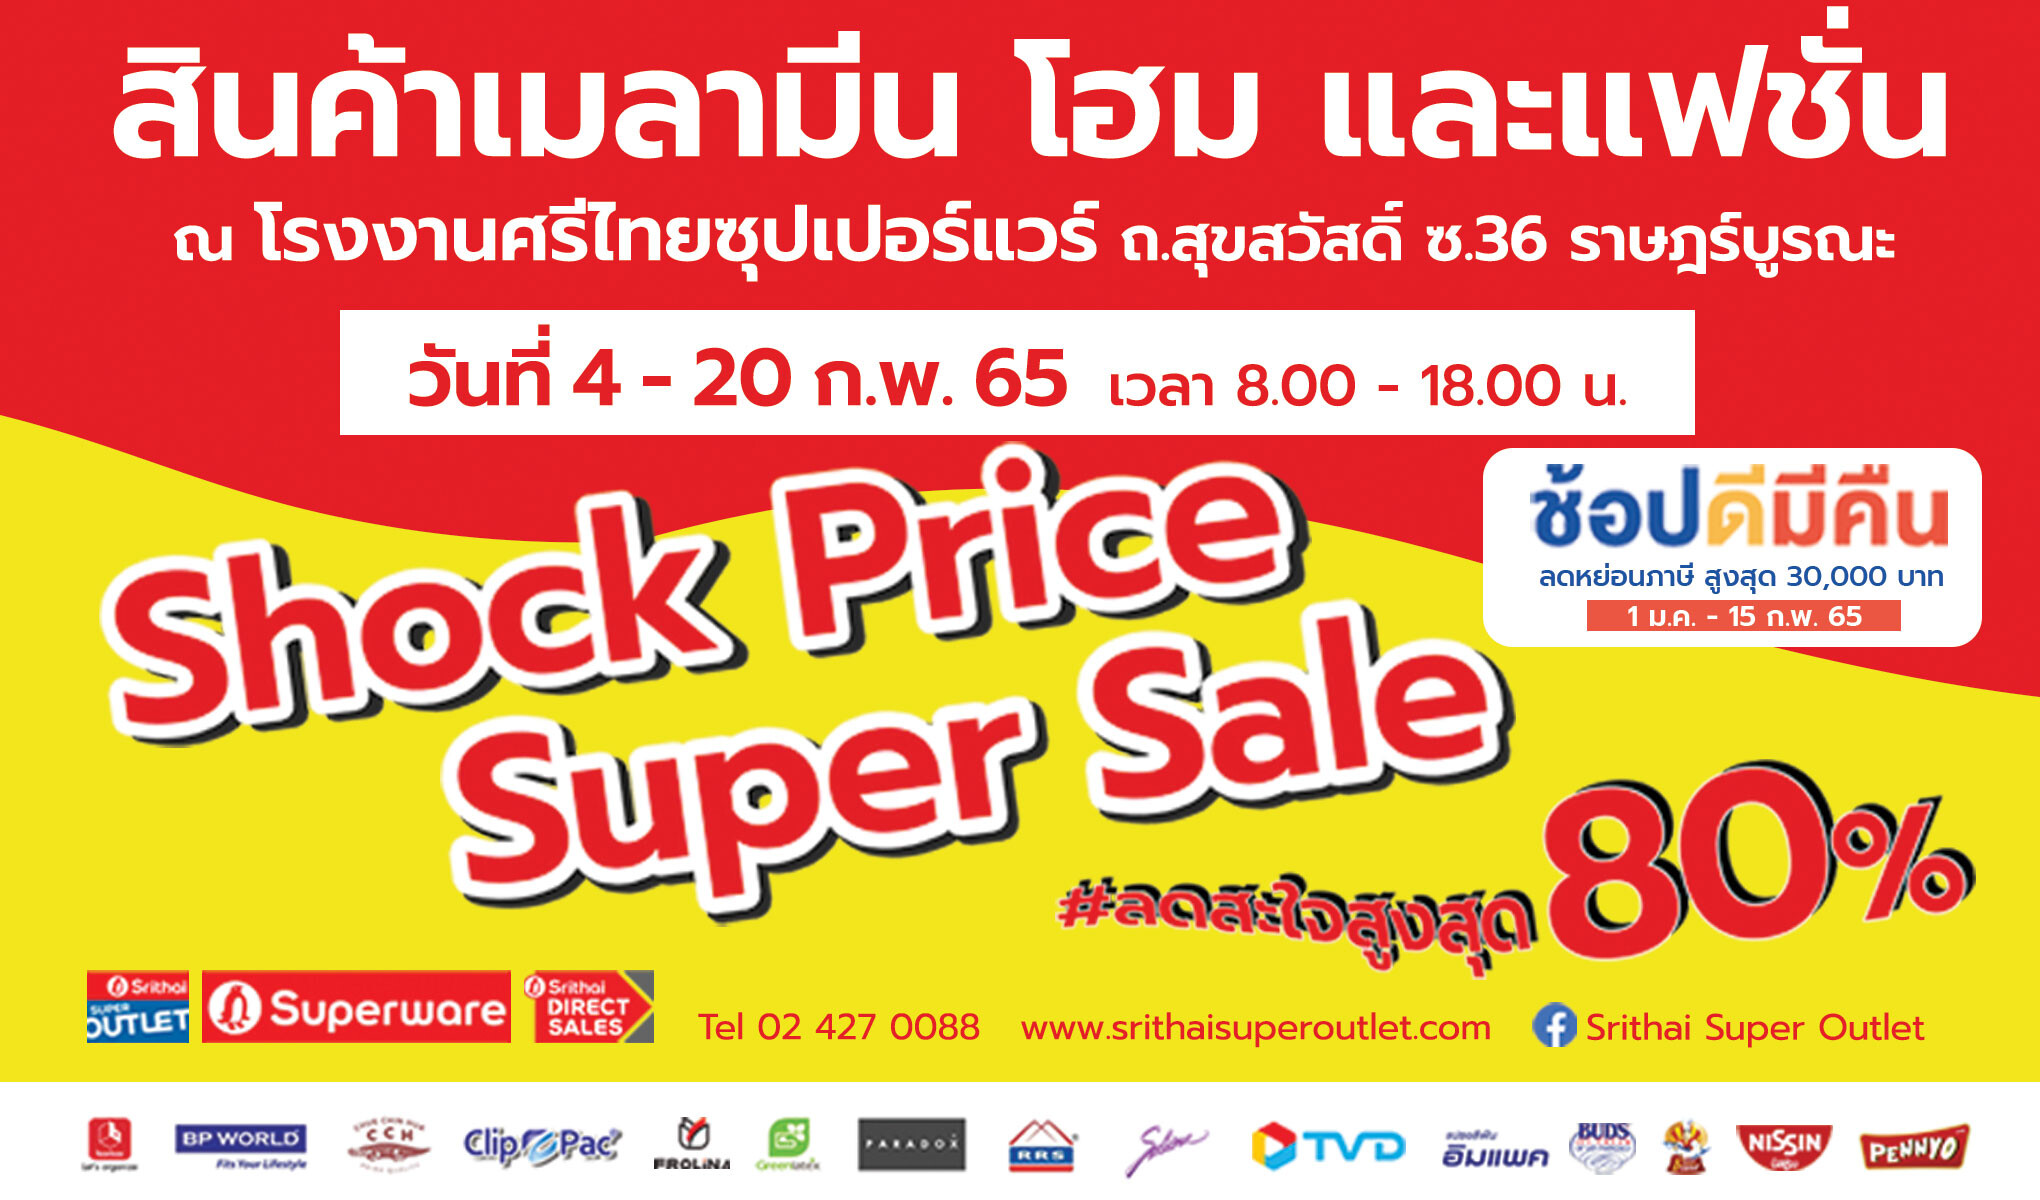 Shock Price Super Sale ลดสะใจสูงสุด 80% ที่โรงงานศรีไทยซุปเปอร์แวร์ สาขาสุขสวัสดิ์ ซอย 36